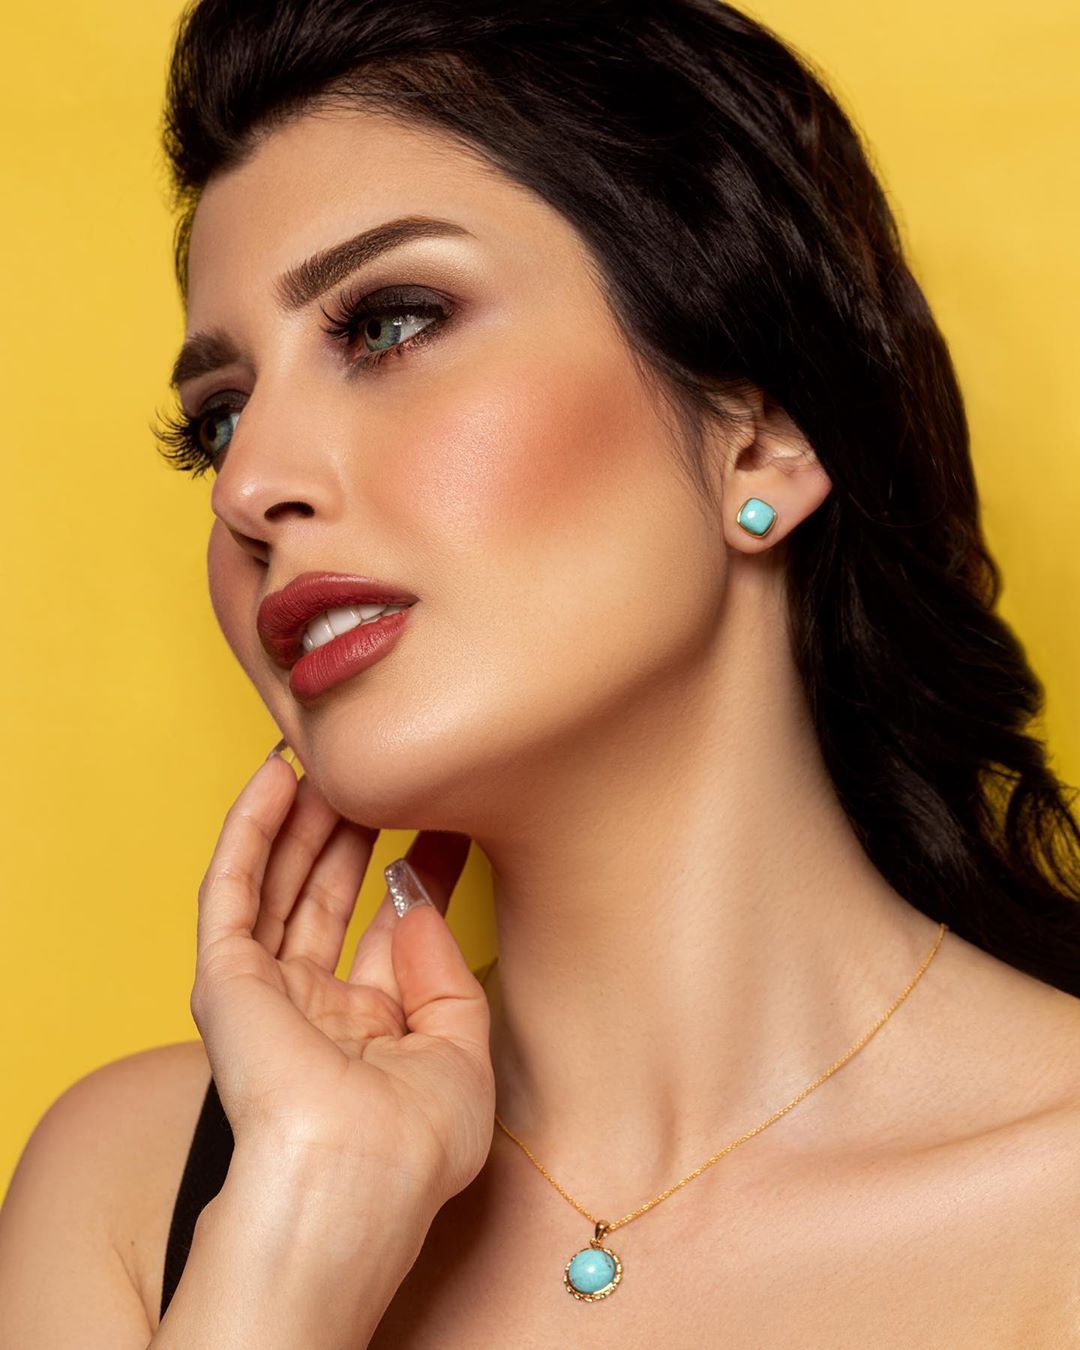 Arabic Lady Portrait with Yellow Background